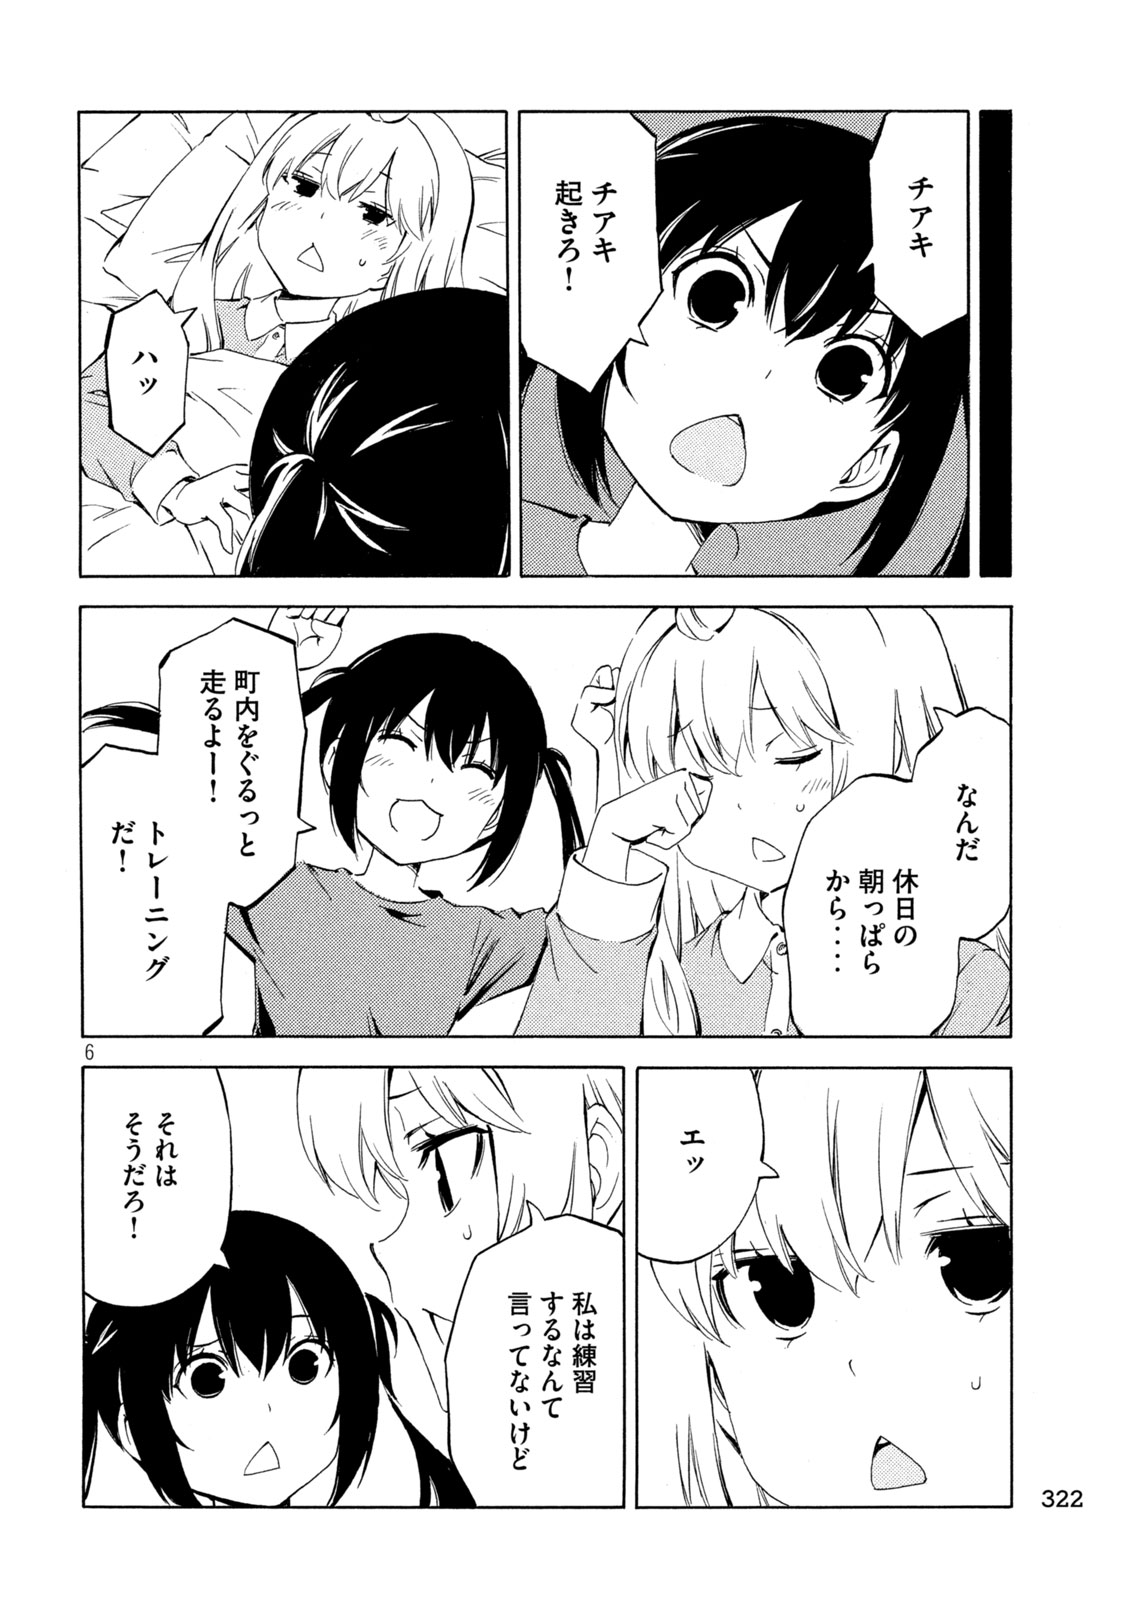 Minami-ke - Chapter 480 - Page 6